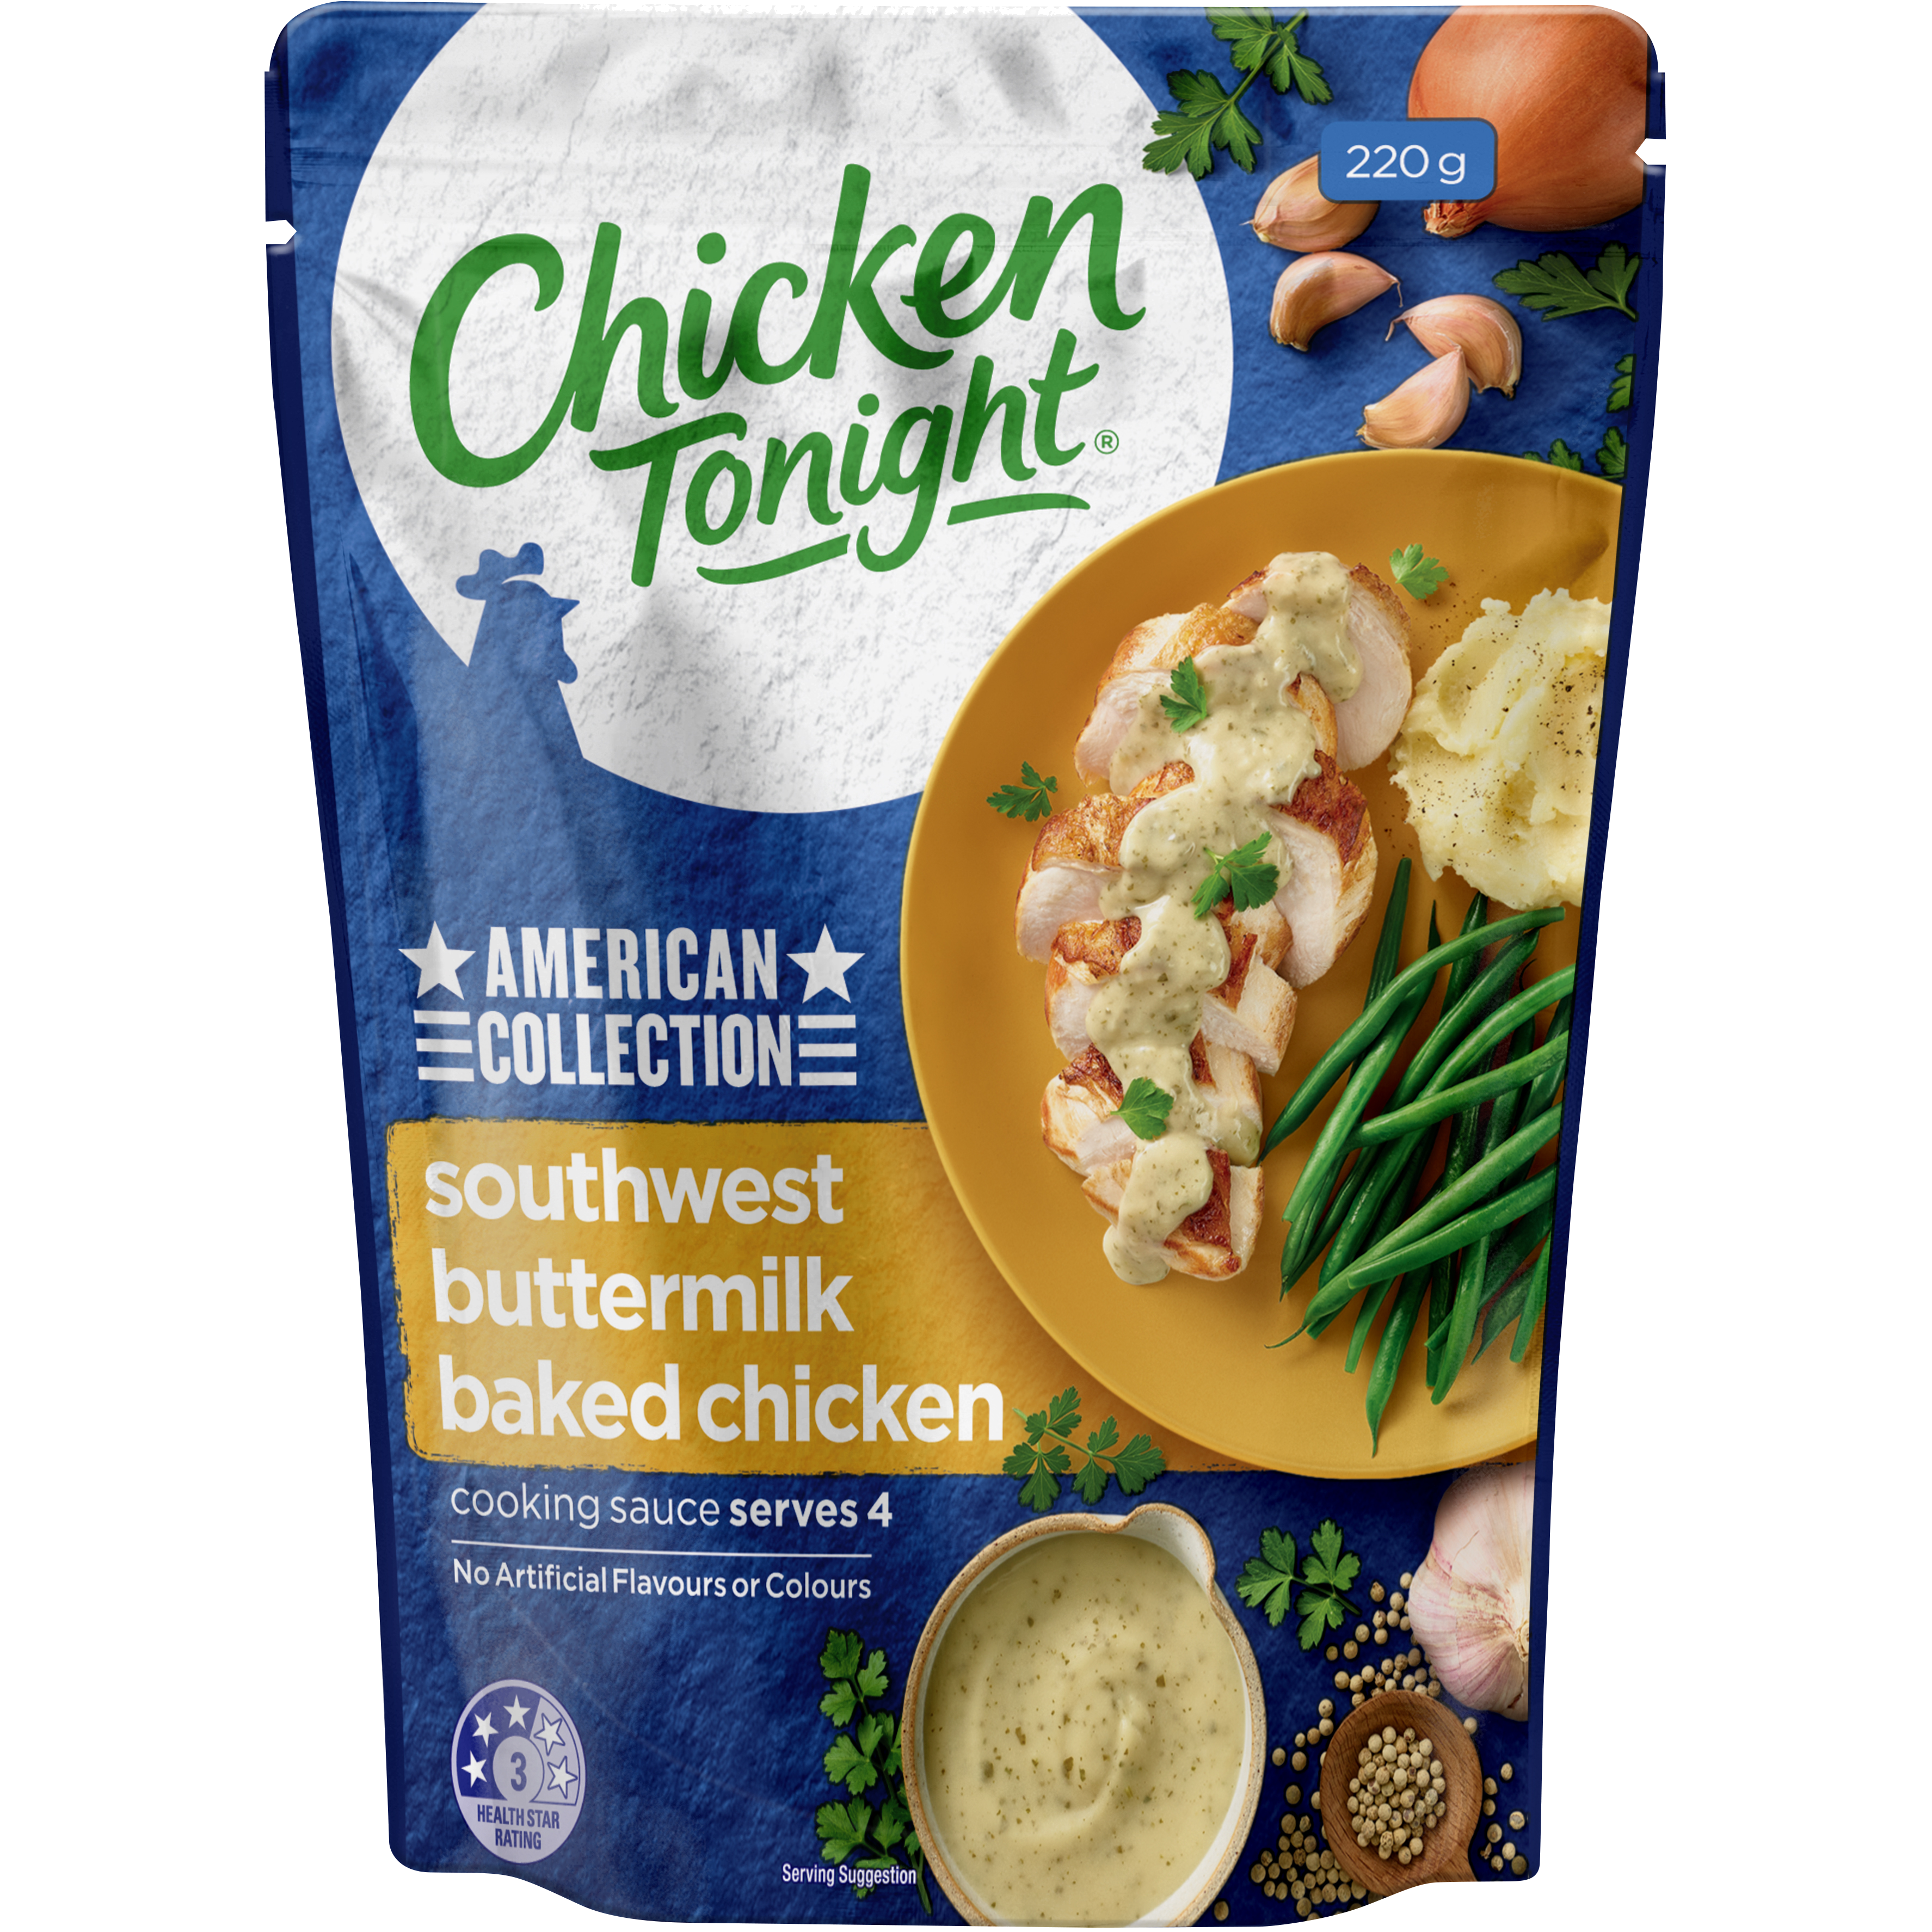 Chicken Tonight Product Image